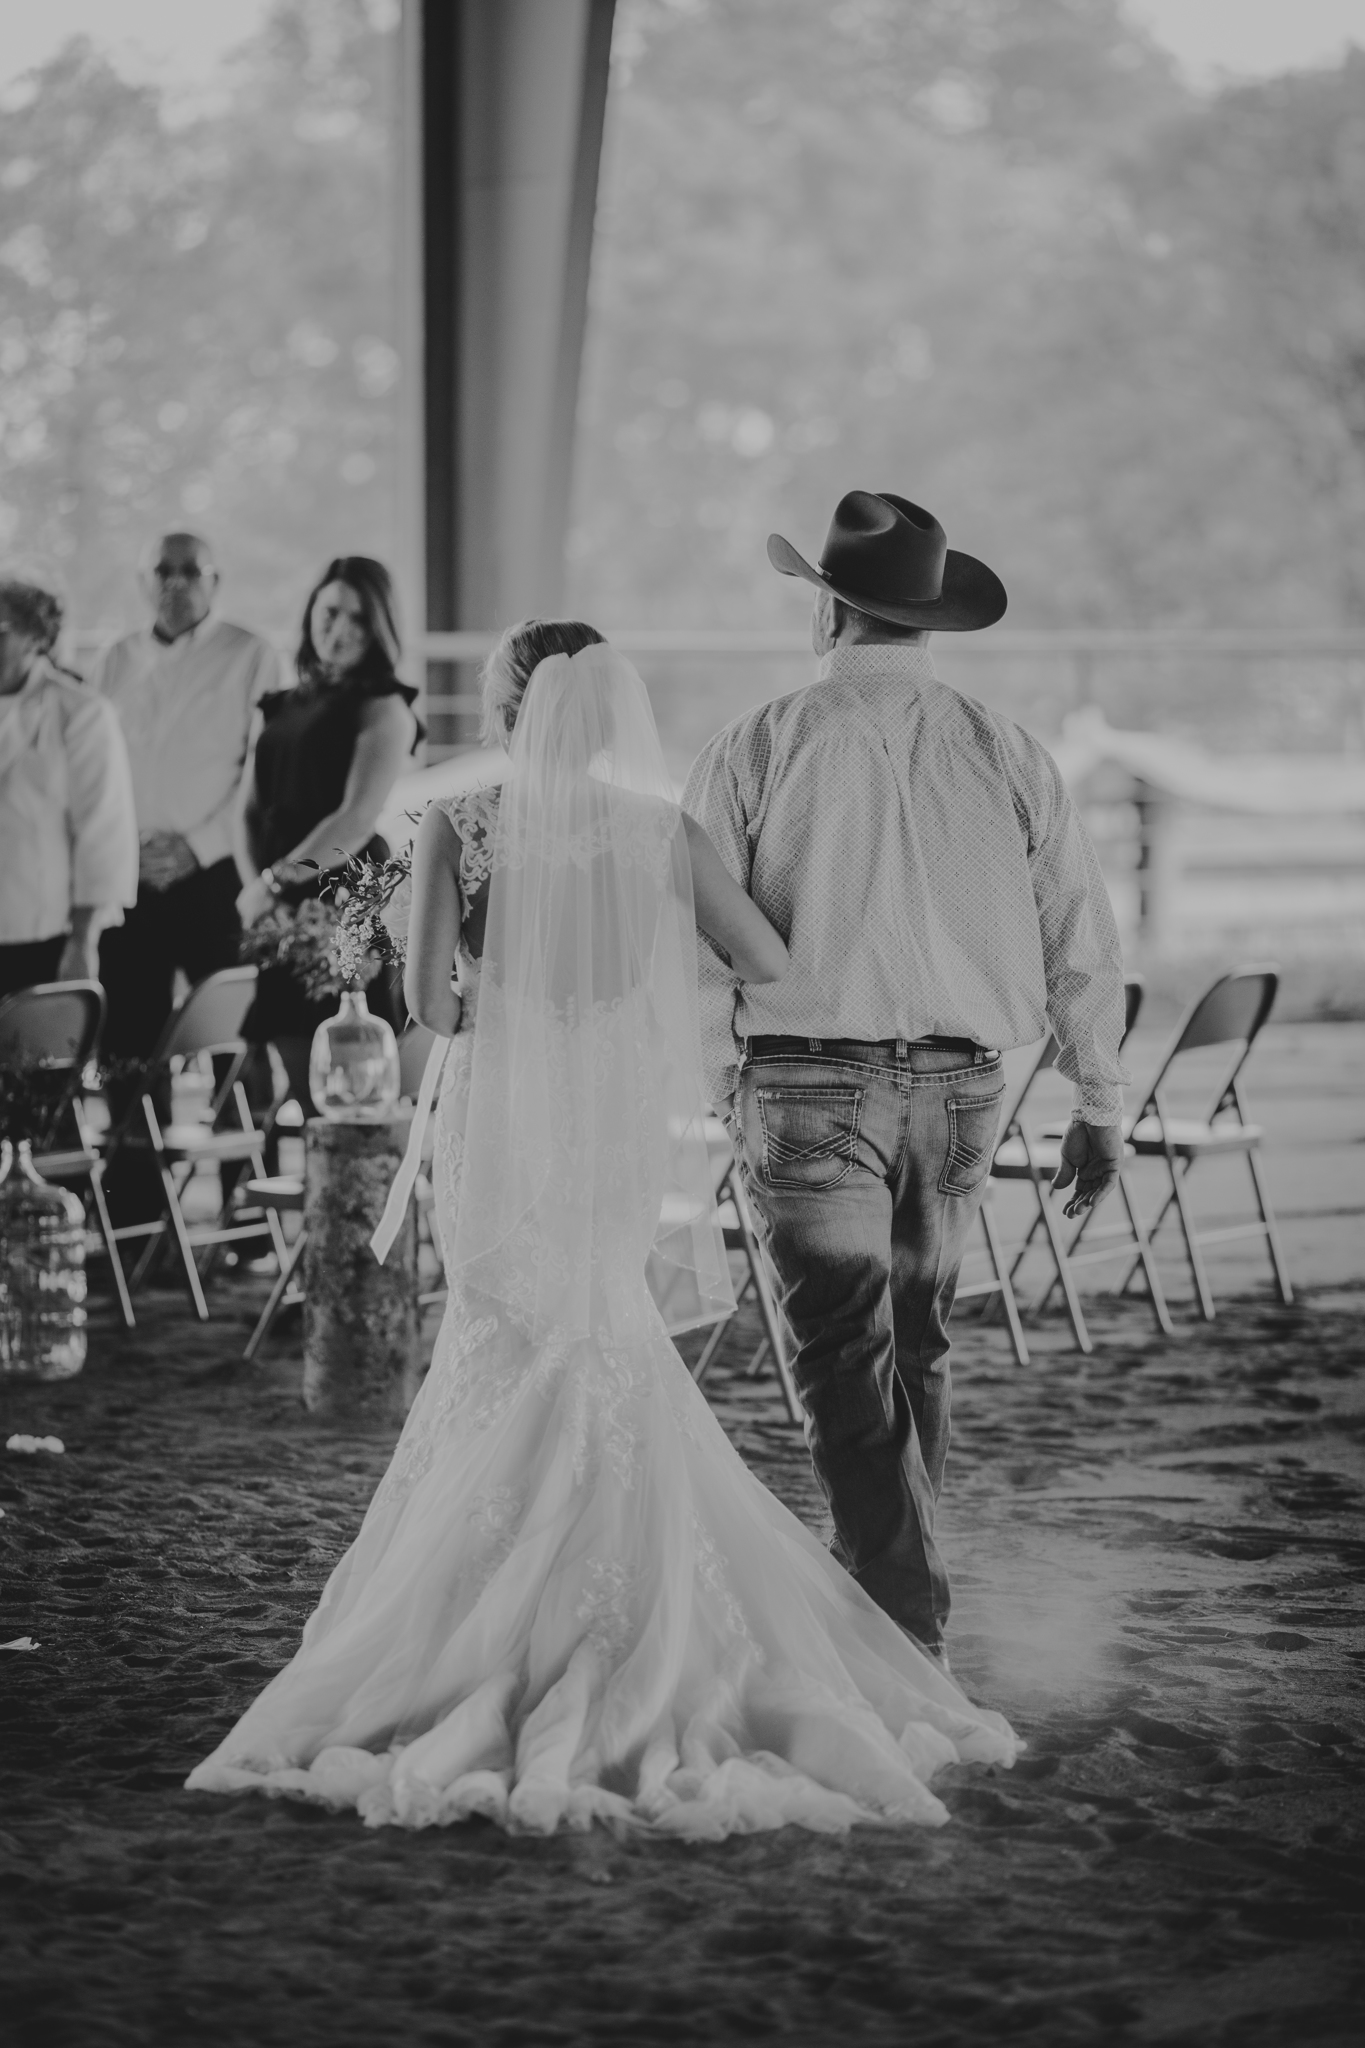 Minimalistic Barn Wedding featured on Nashville Bride Guide